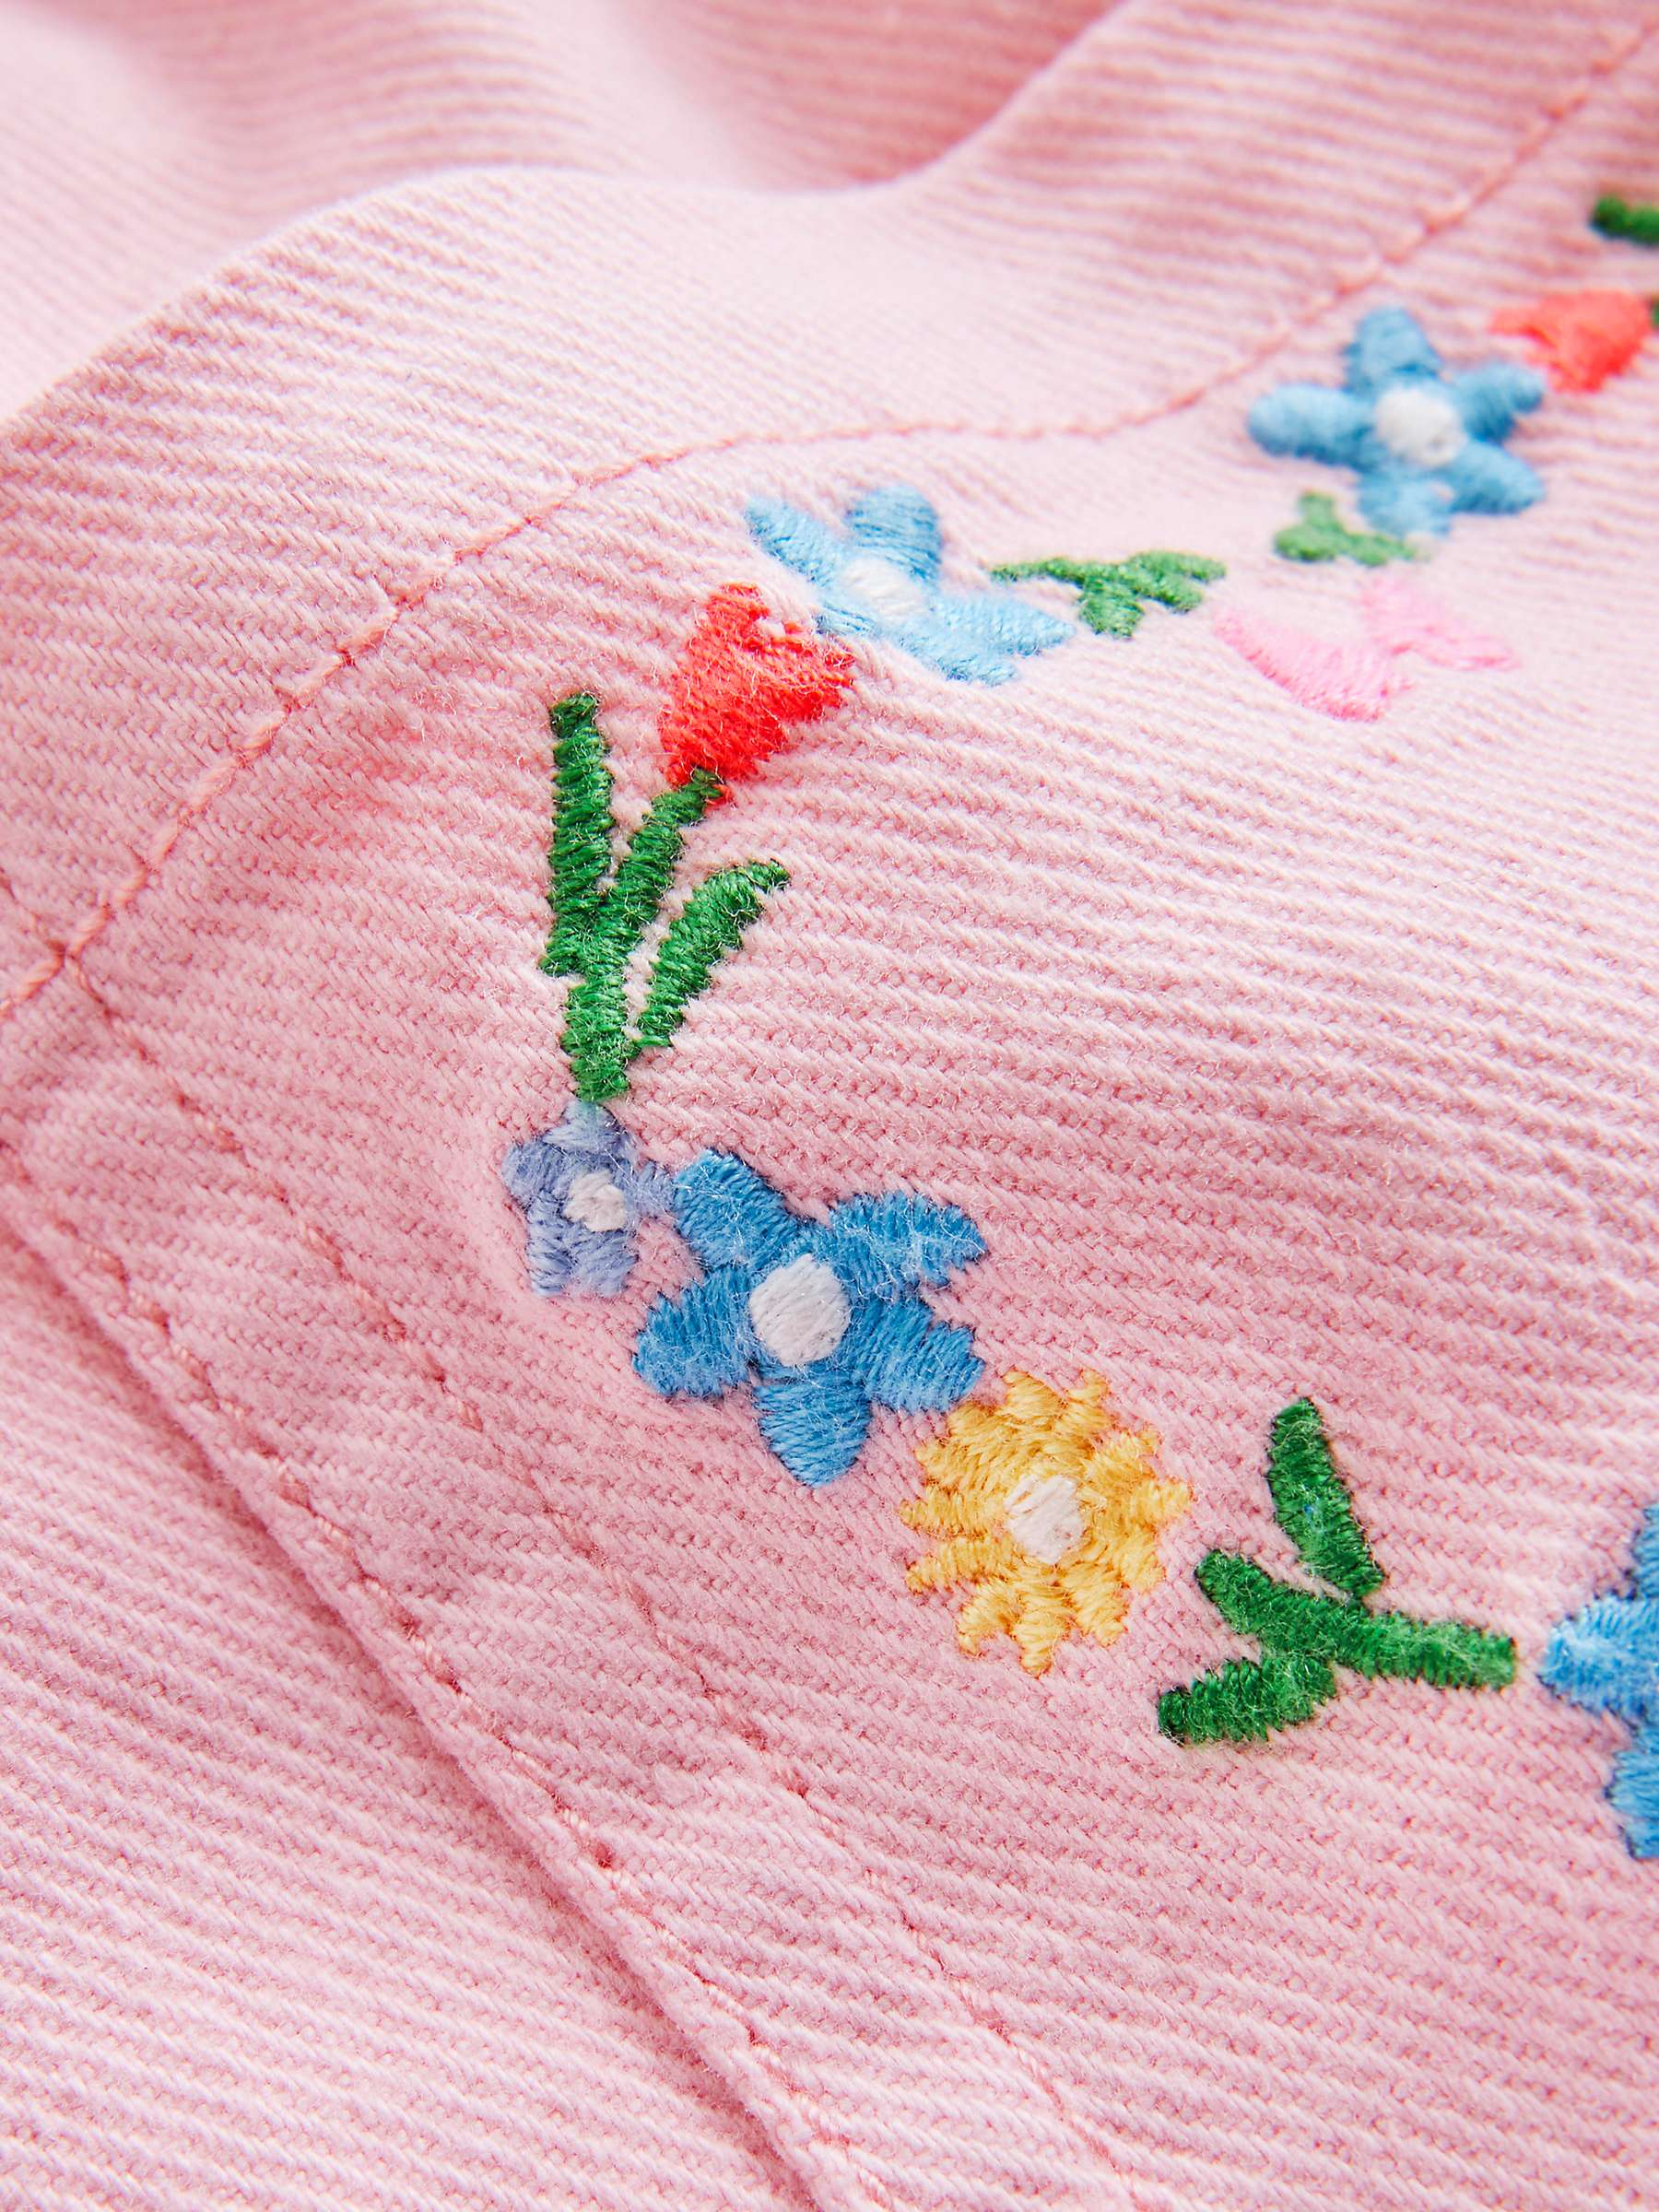 Buy Mini Boden Kids' Floral Embroidered Paperbag Pull On Shorts, Ballet Pink Online at johnlewis.com